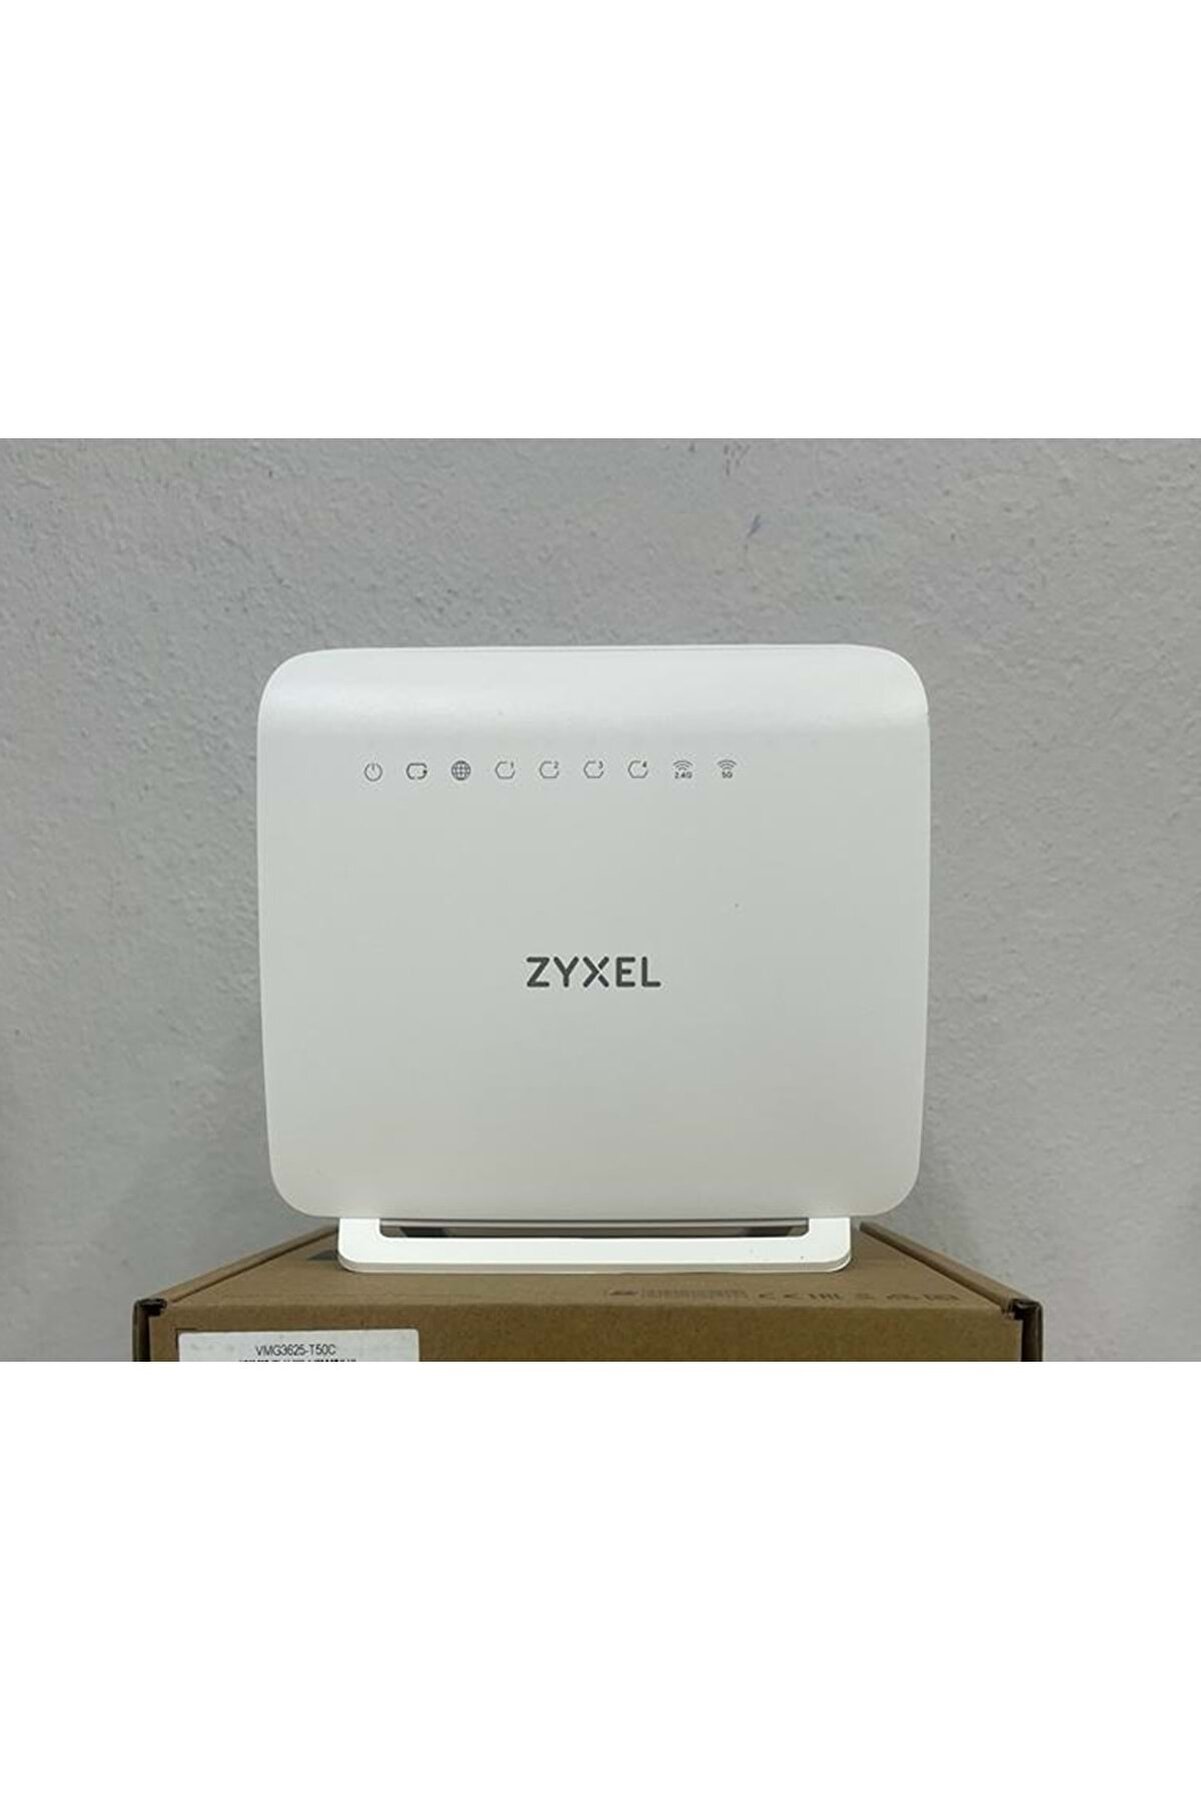 Zyxel Vmg3625-t50c Ac 1200 Mbps Vdsl2 Modem/router